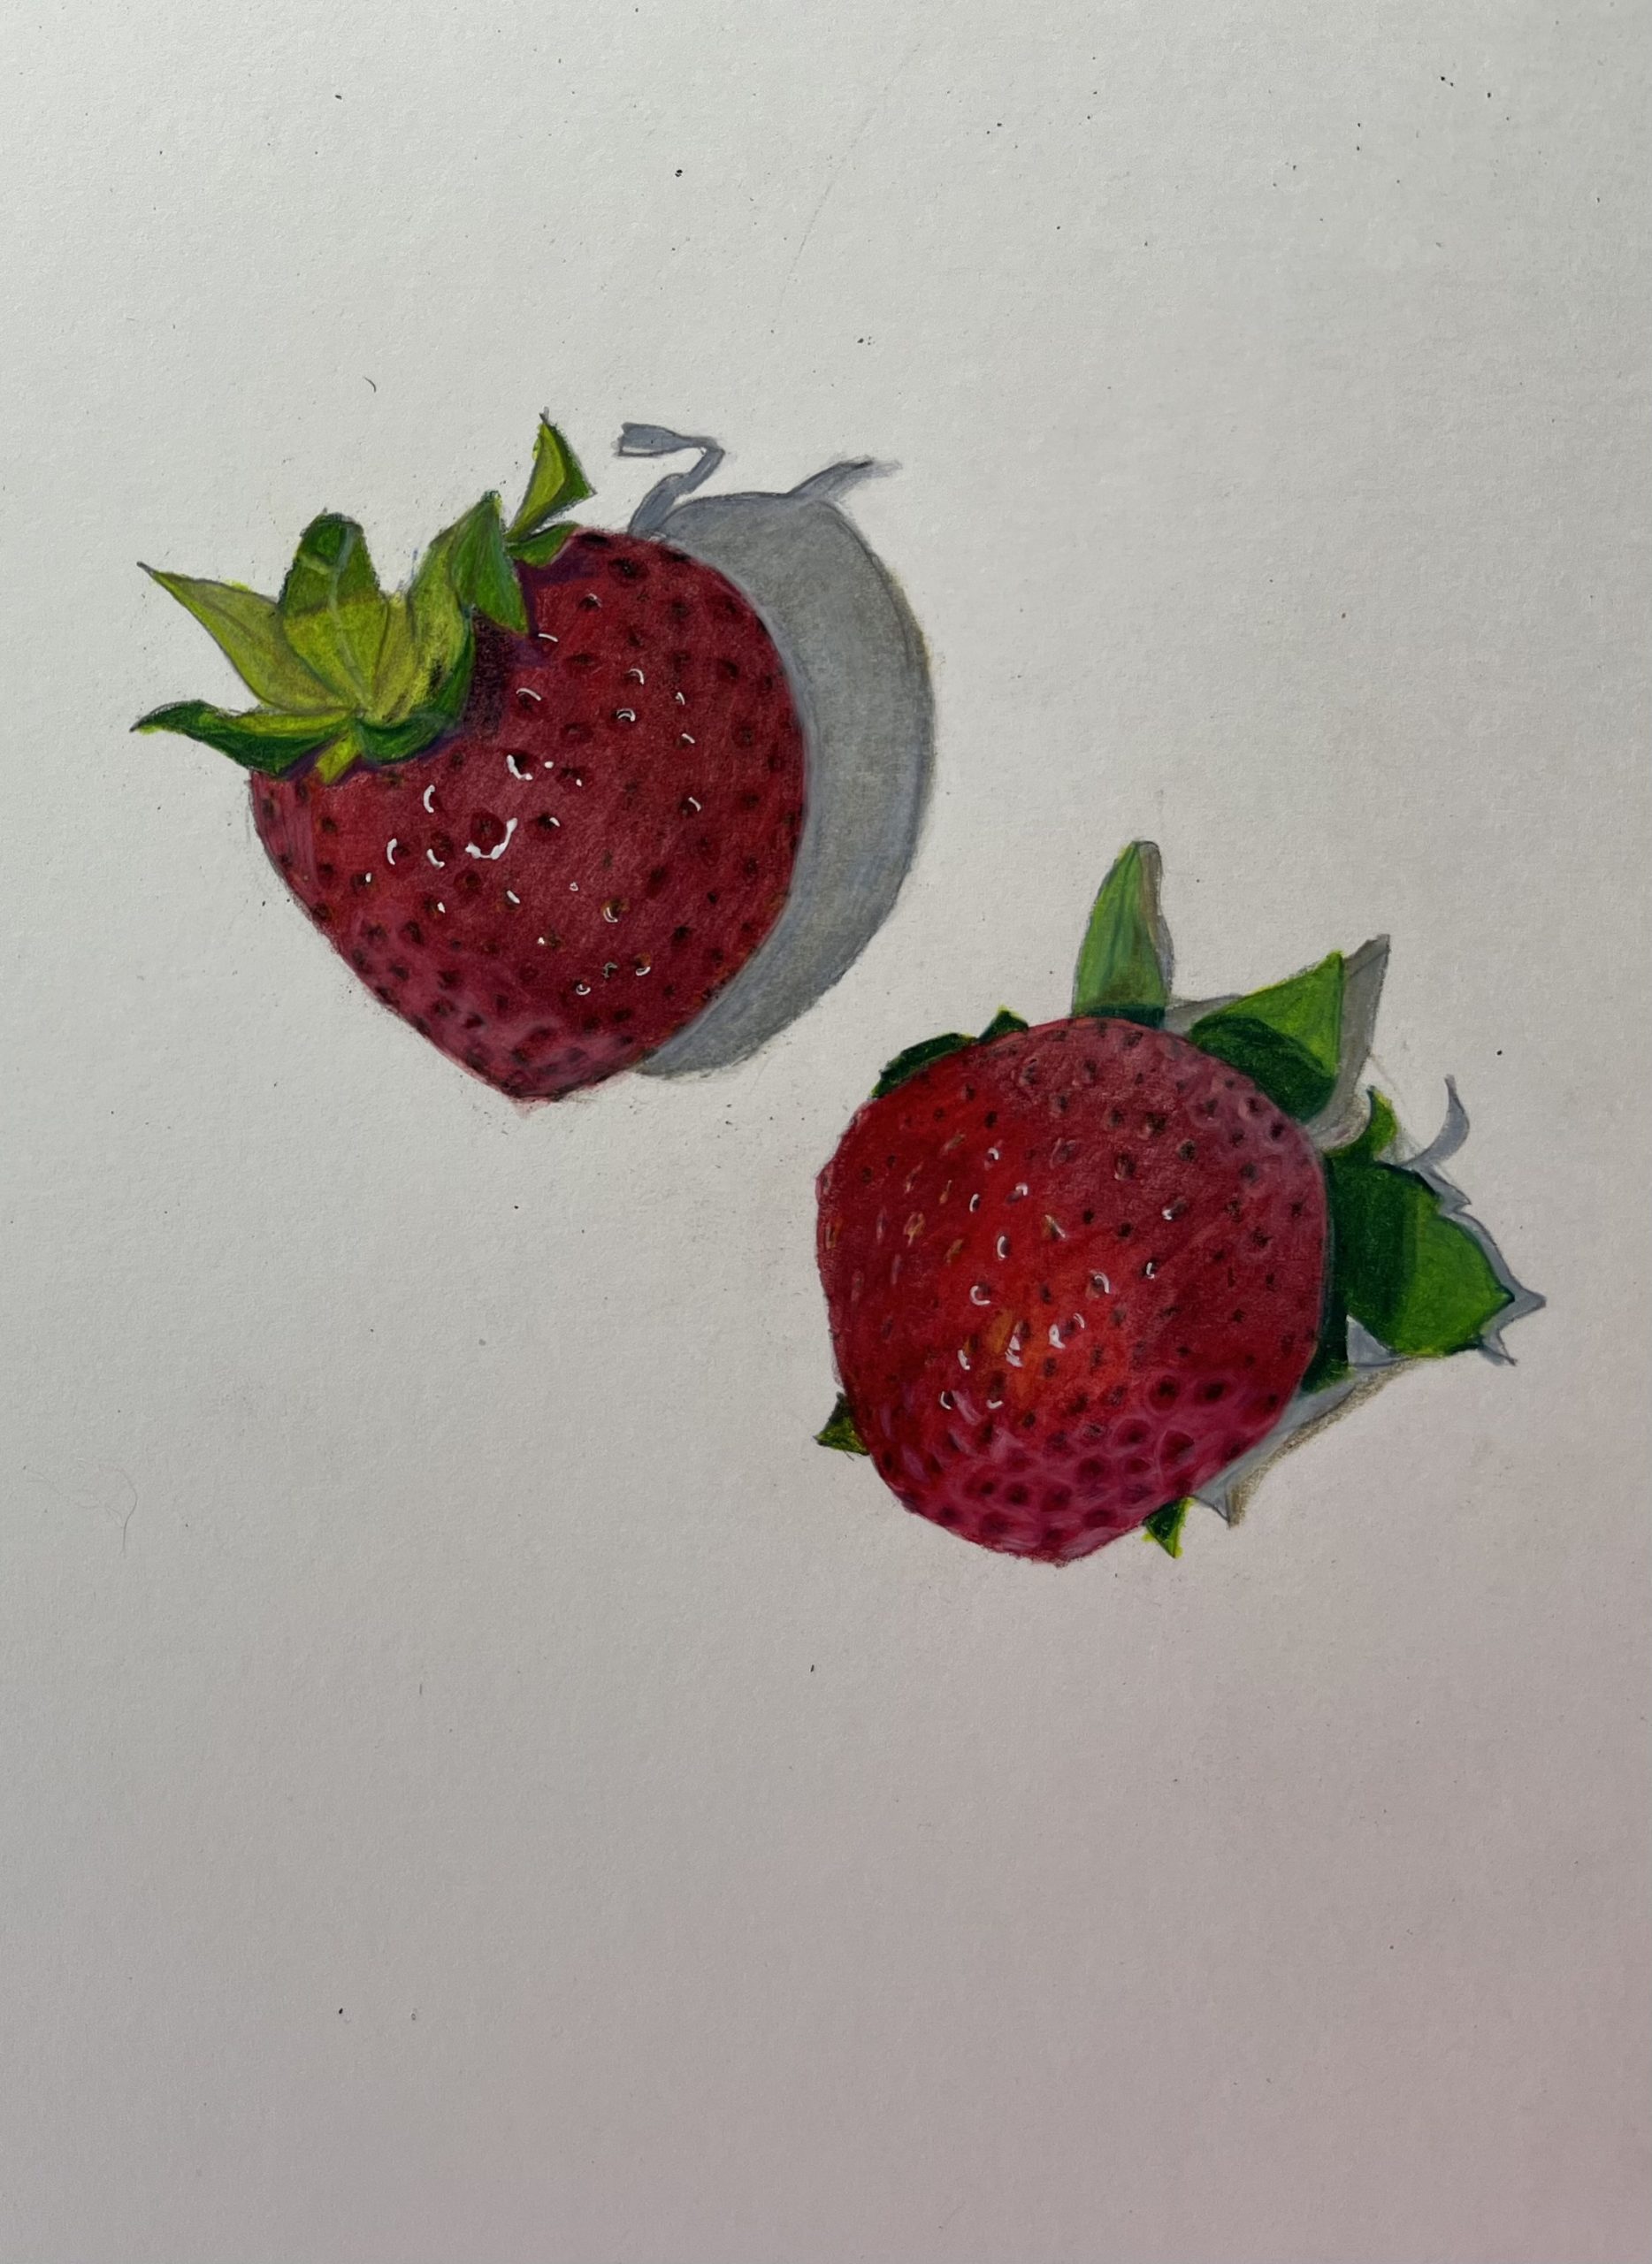 Strawberries, study in realism